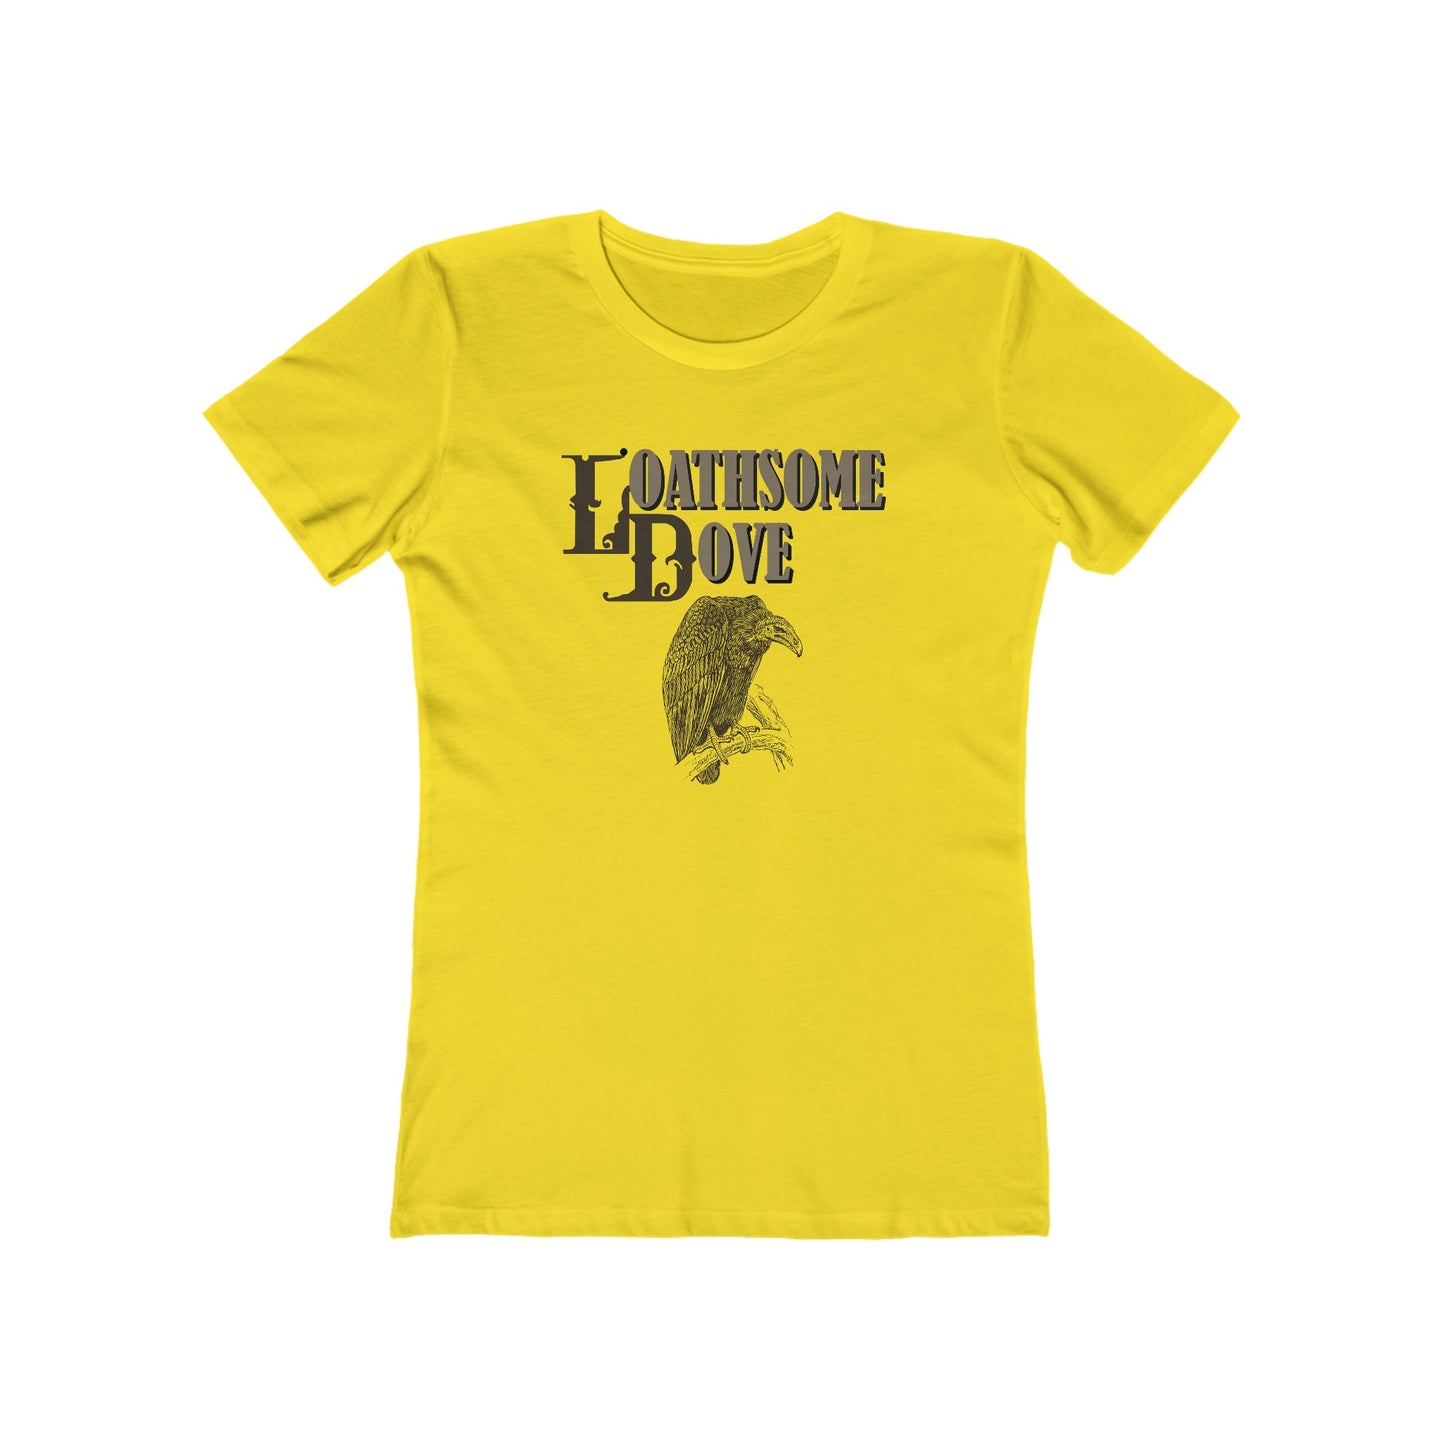 Loathsome Dove - Women's T-Shirt